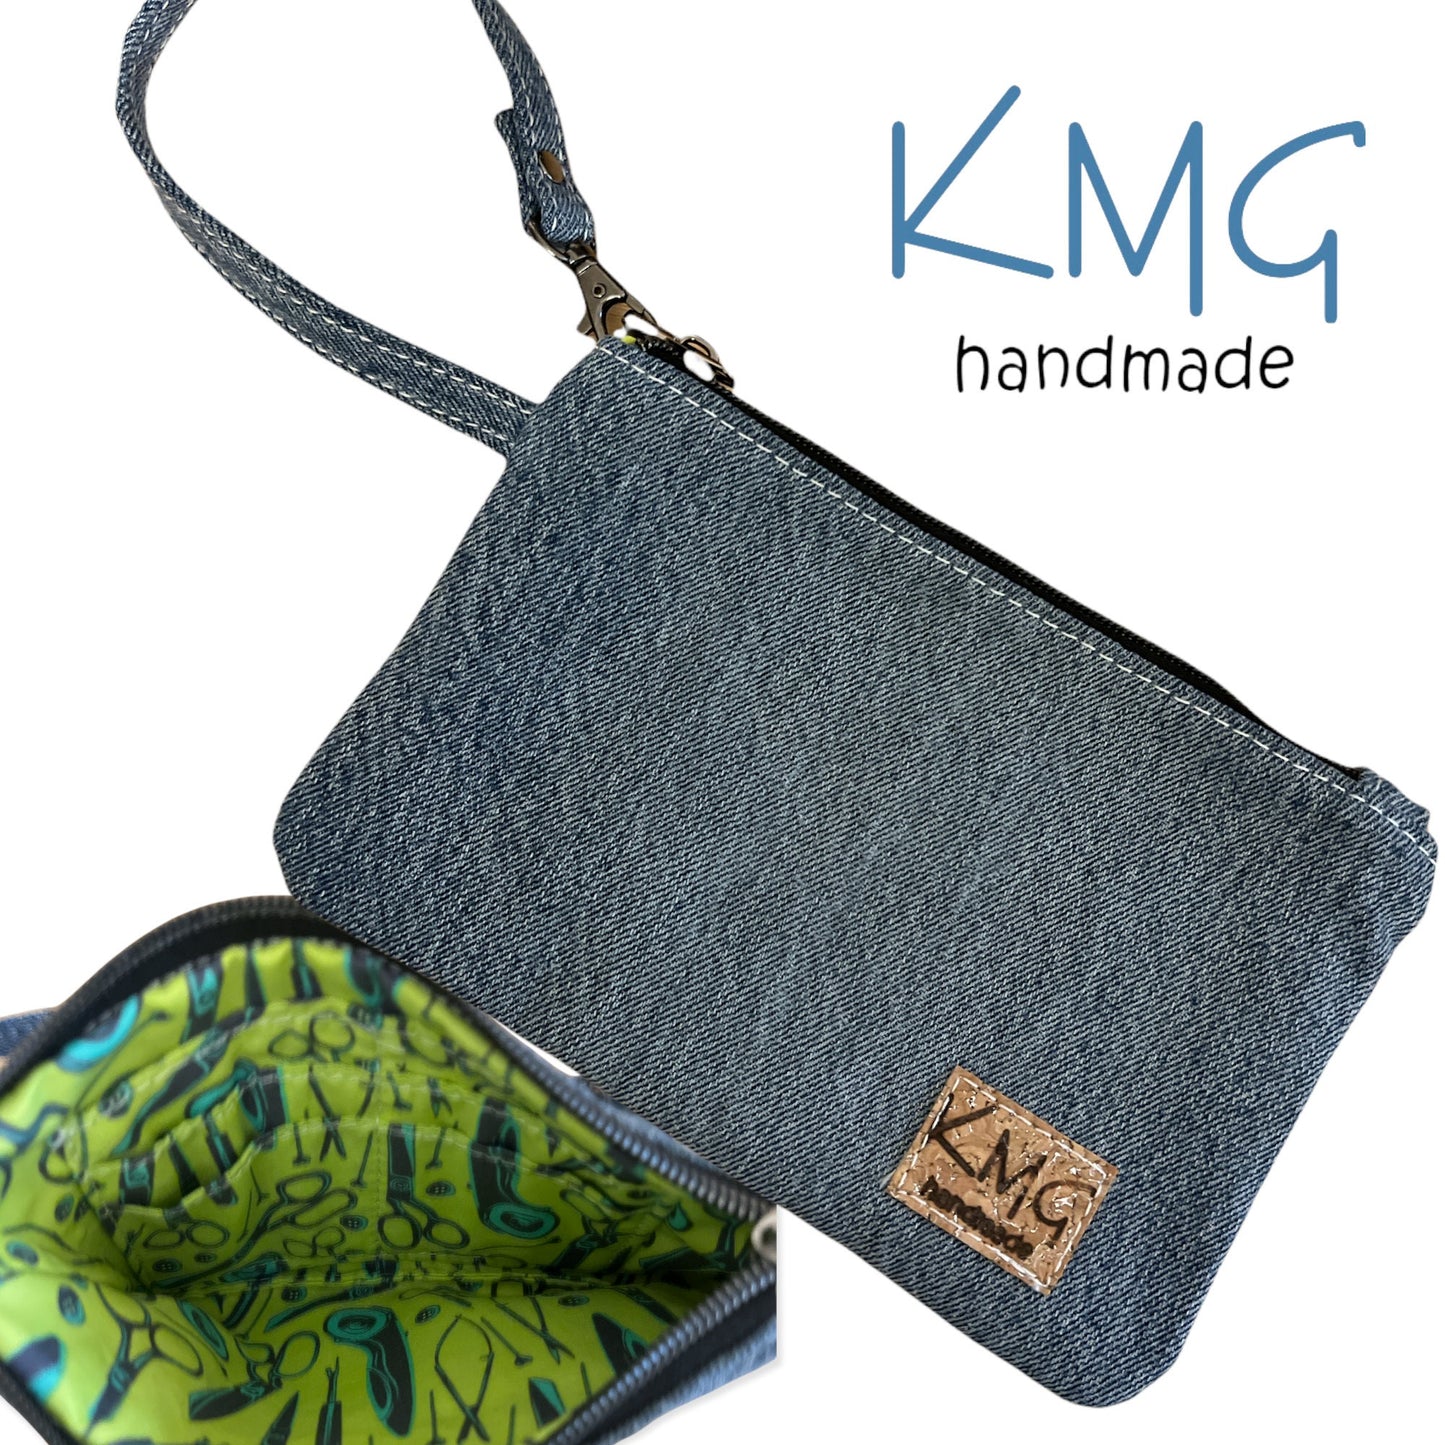 KMGhandmade Original Clip & Zip Wristlets - Group B